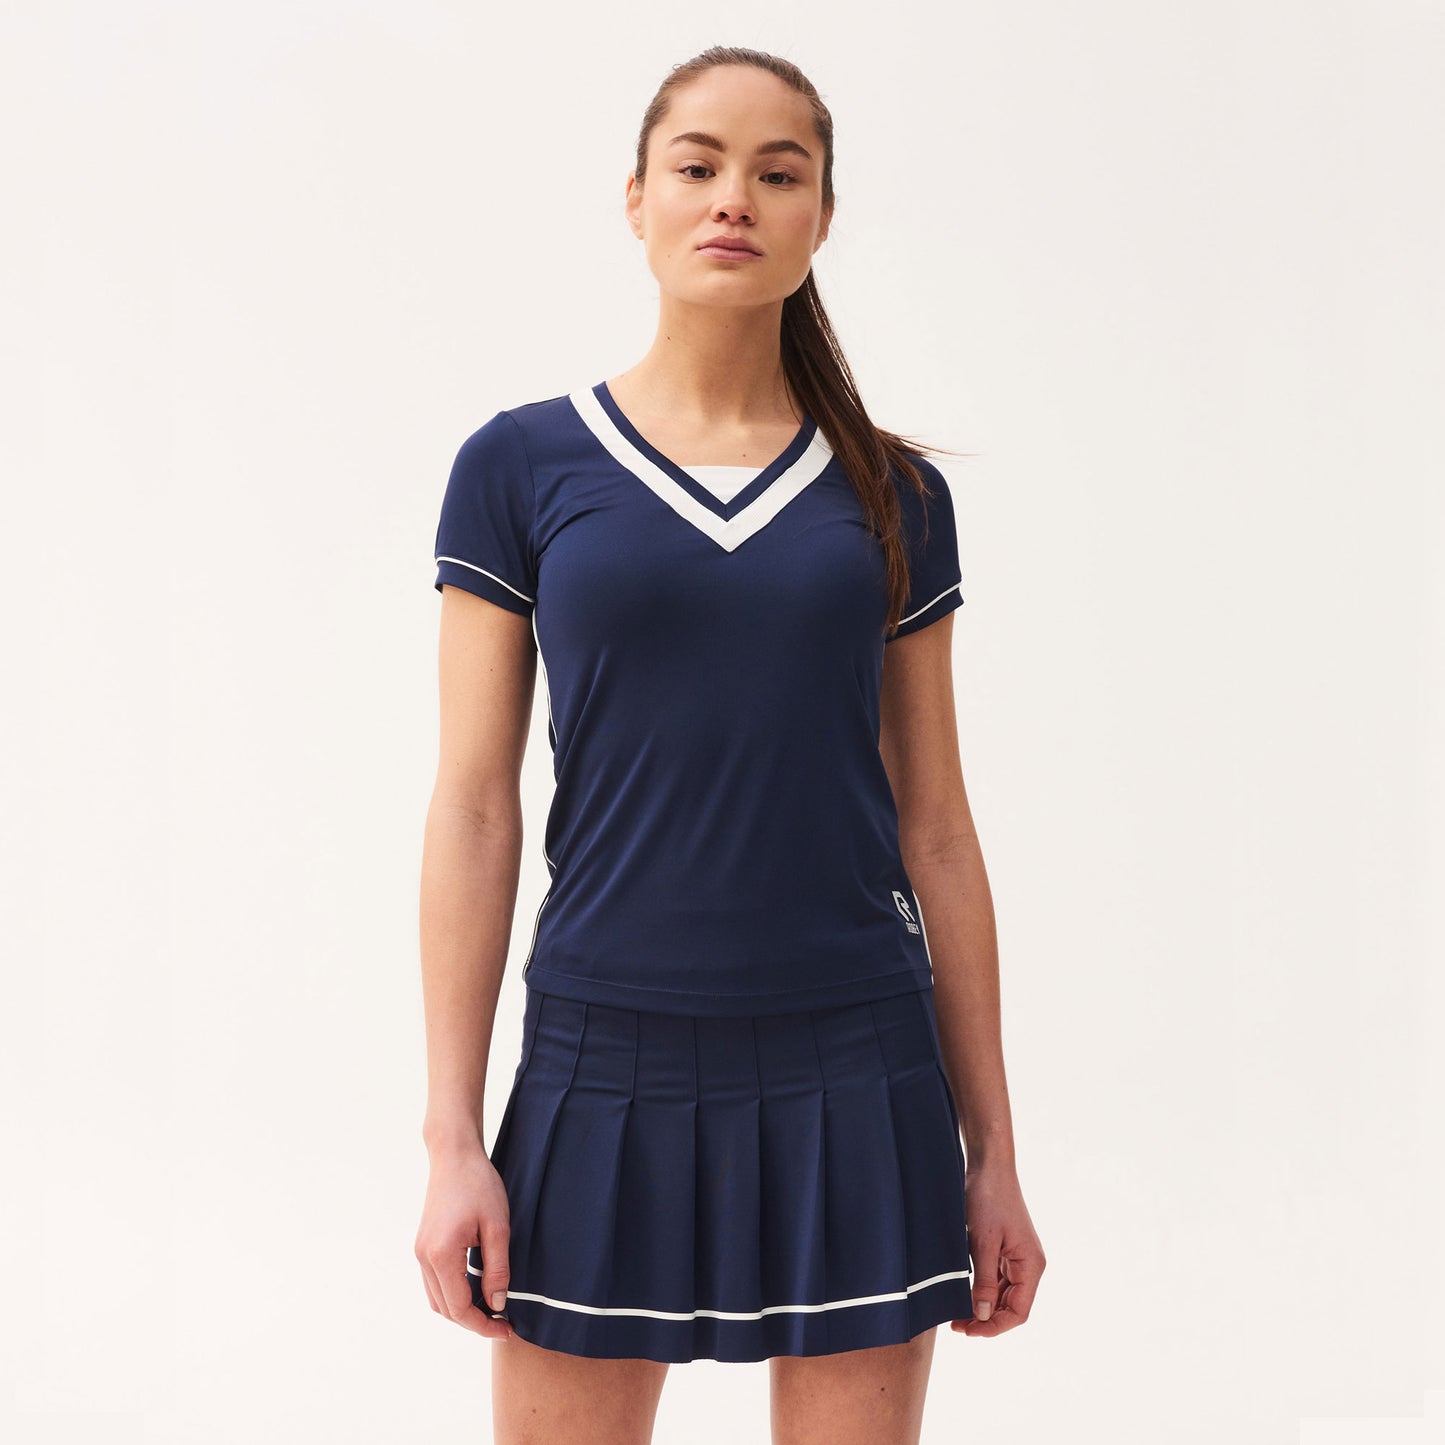 Robey Match Women's Tennis Shirt Dark Blue (1)